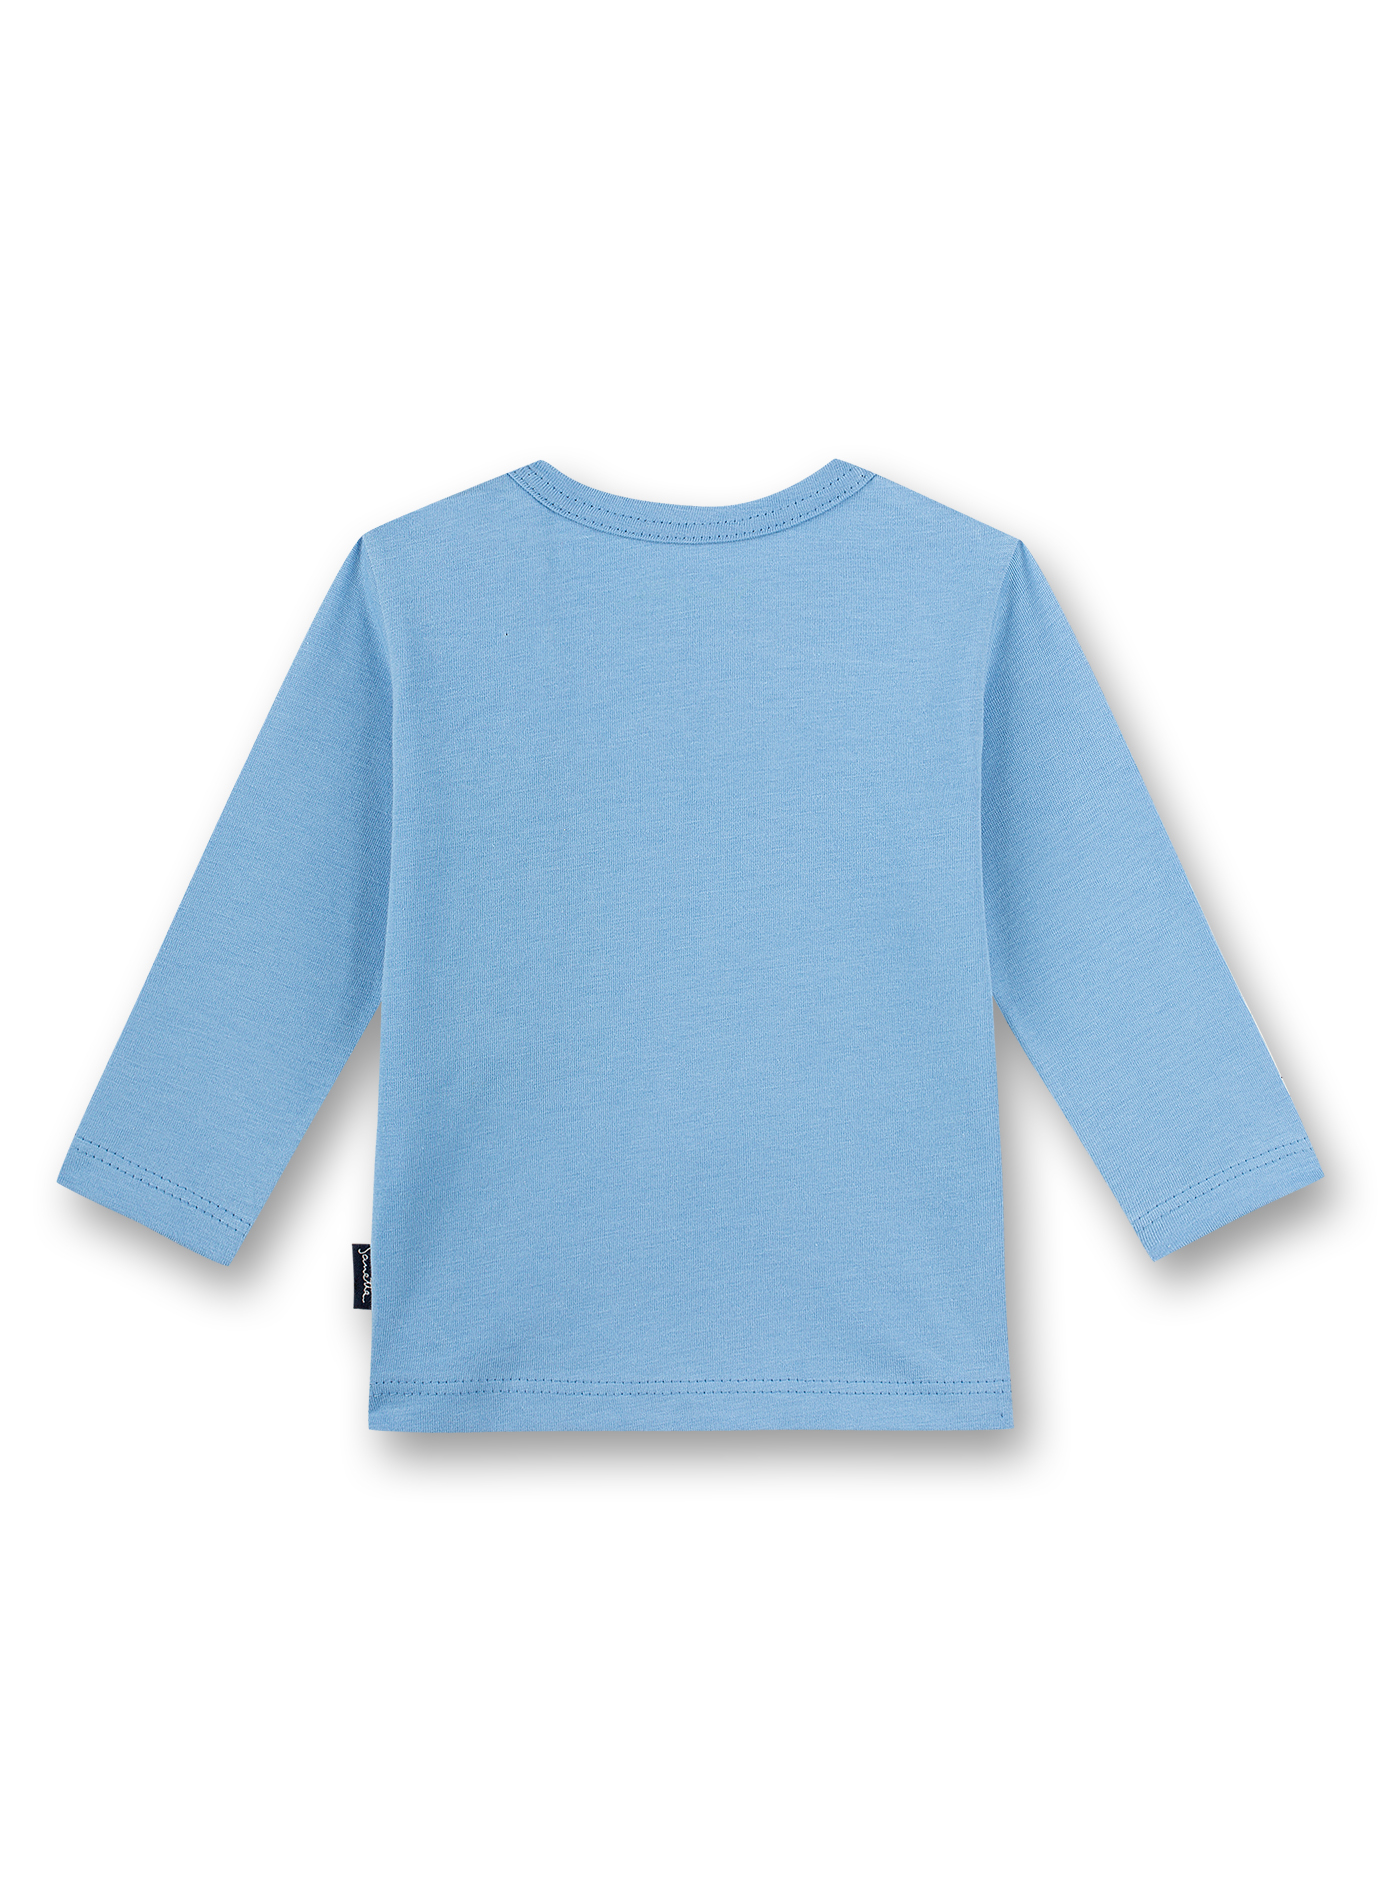 Jungen-Shirt langarm Hellblau Monkey Funky